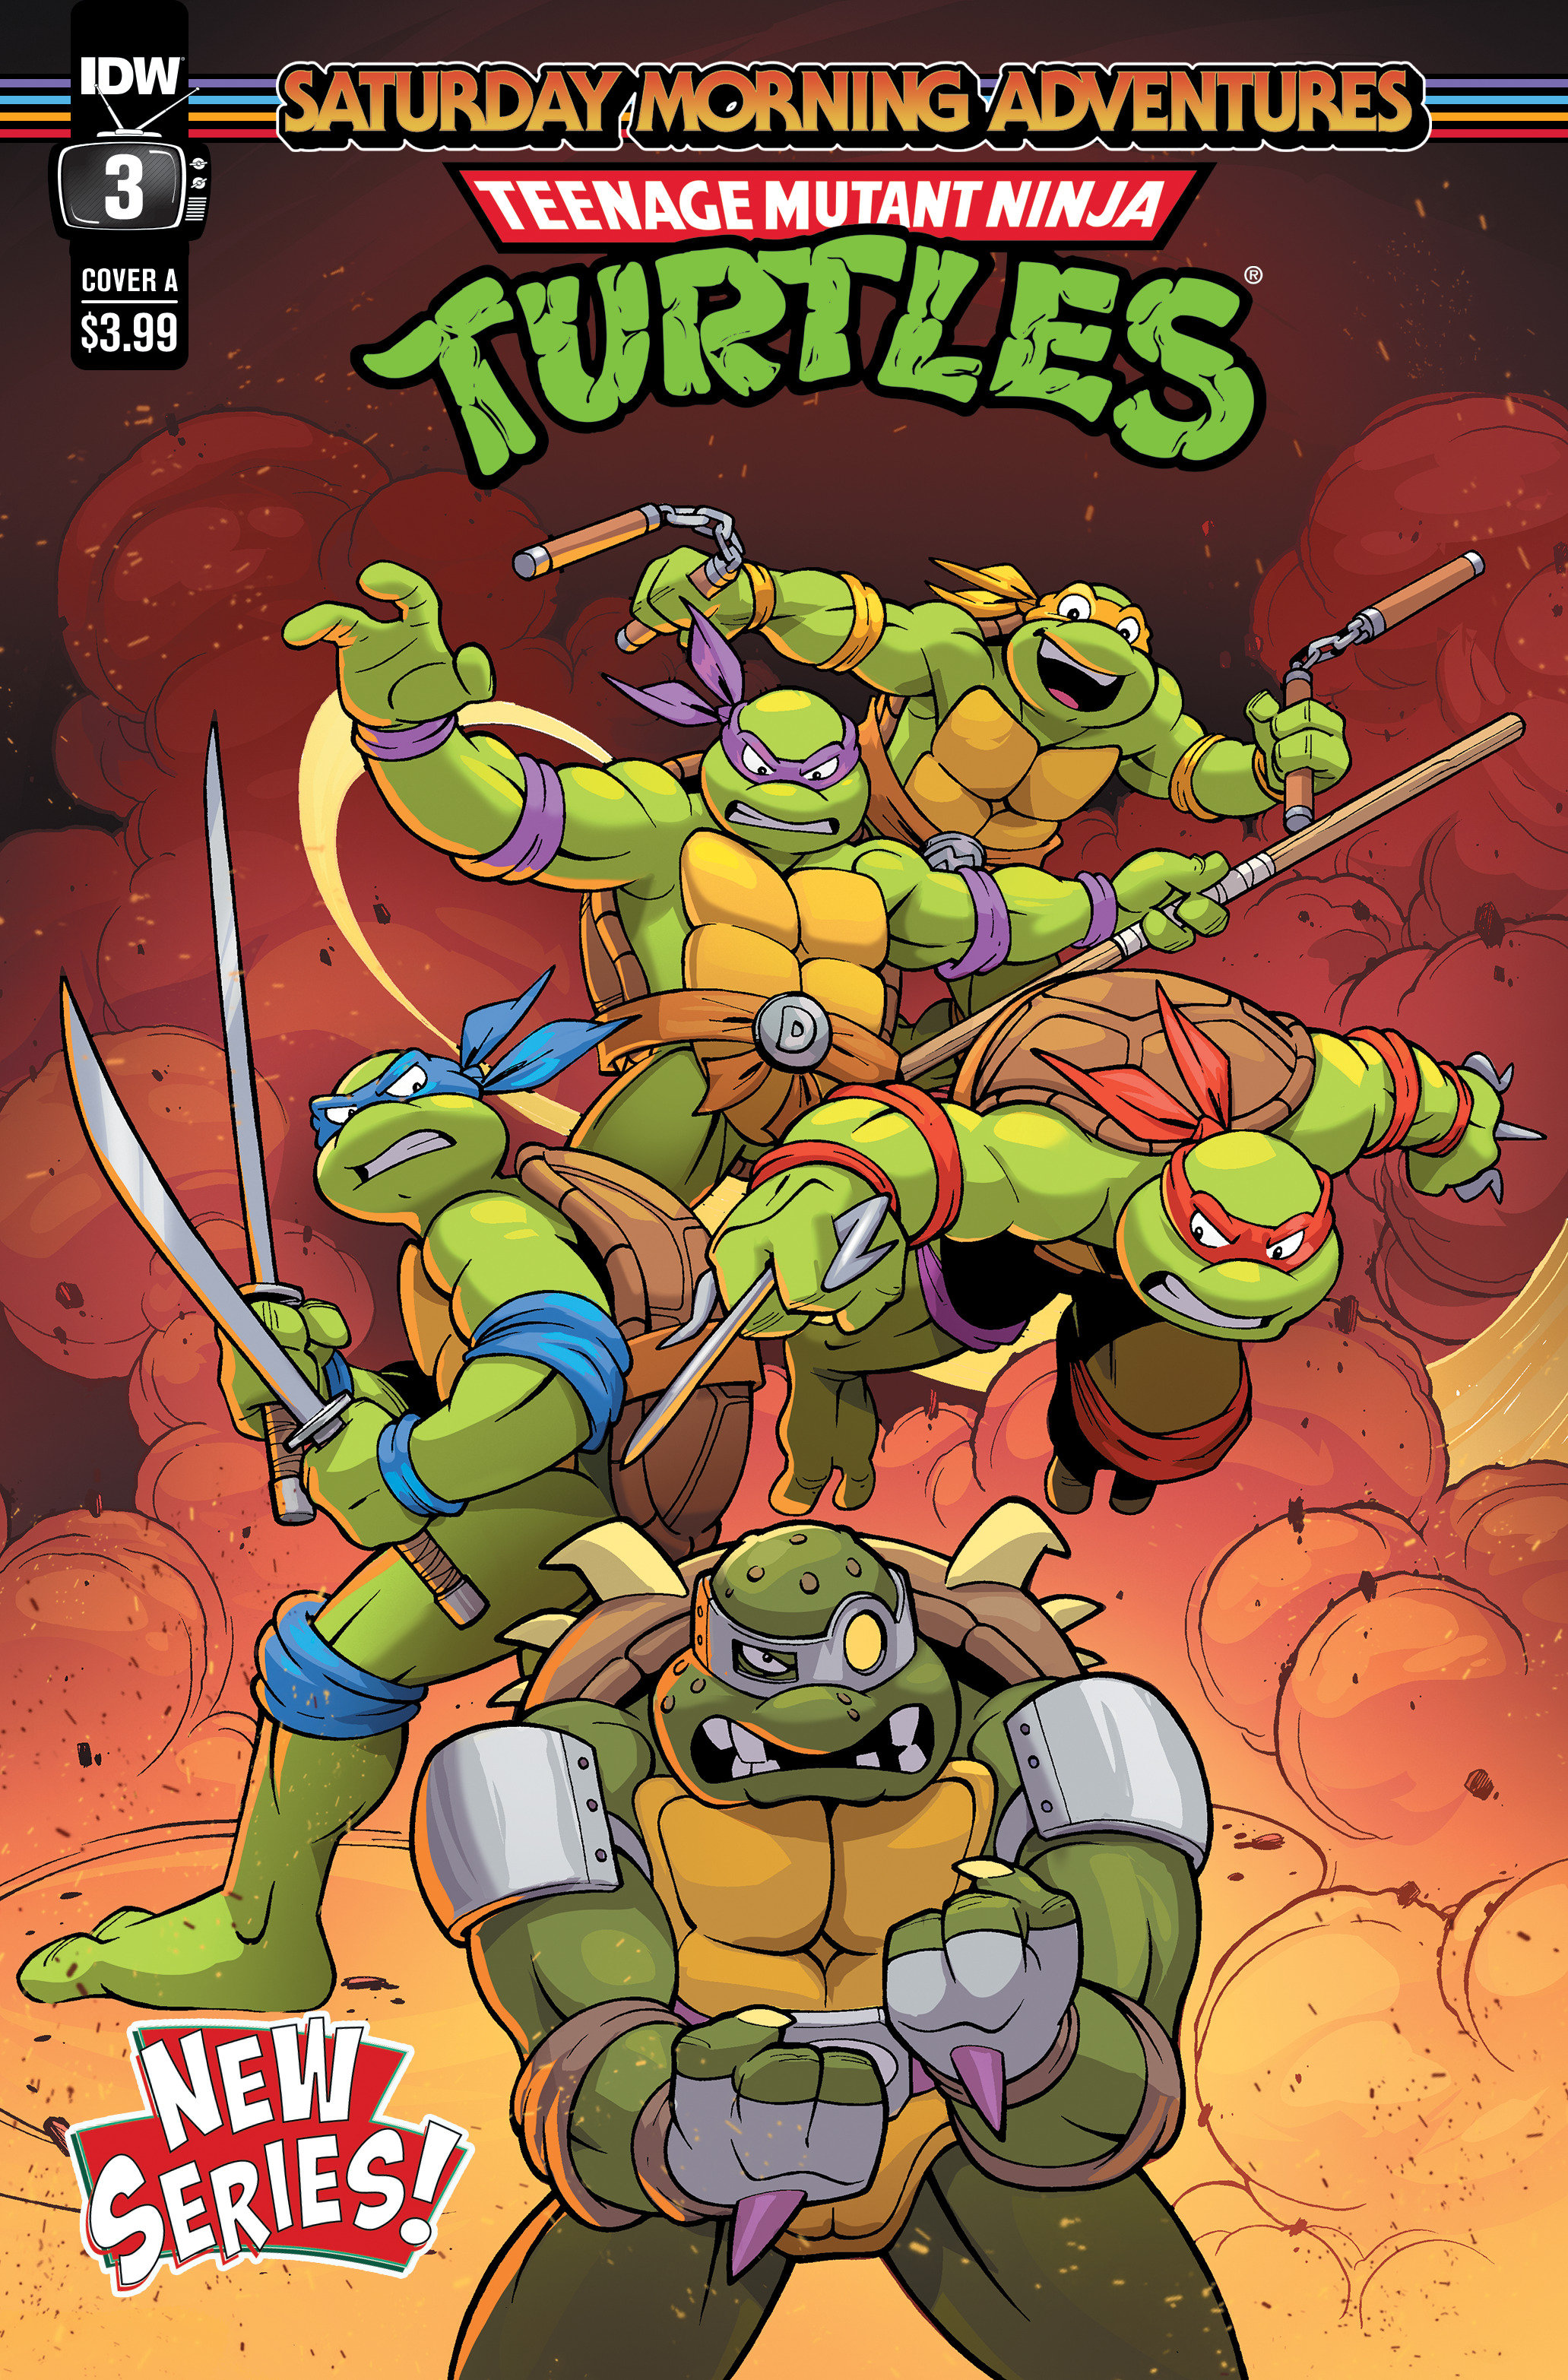 Teenage Mutant Ninja Turtles Saturday Morning Adventures Continued! #3 Cover A La Wrence